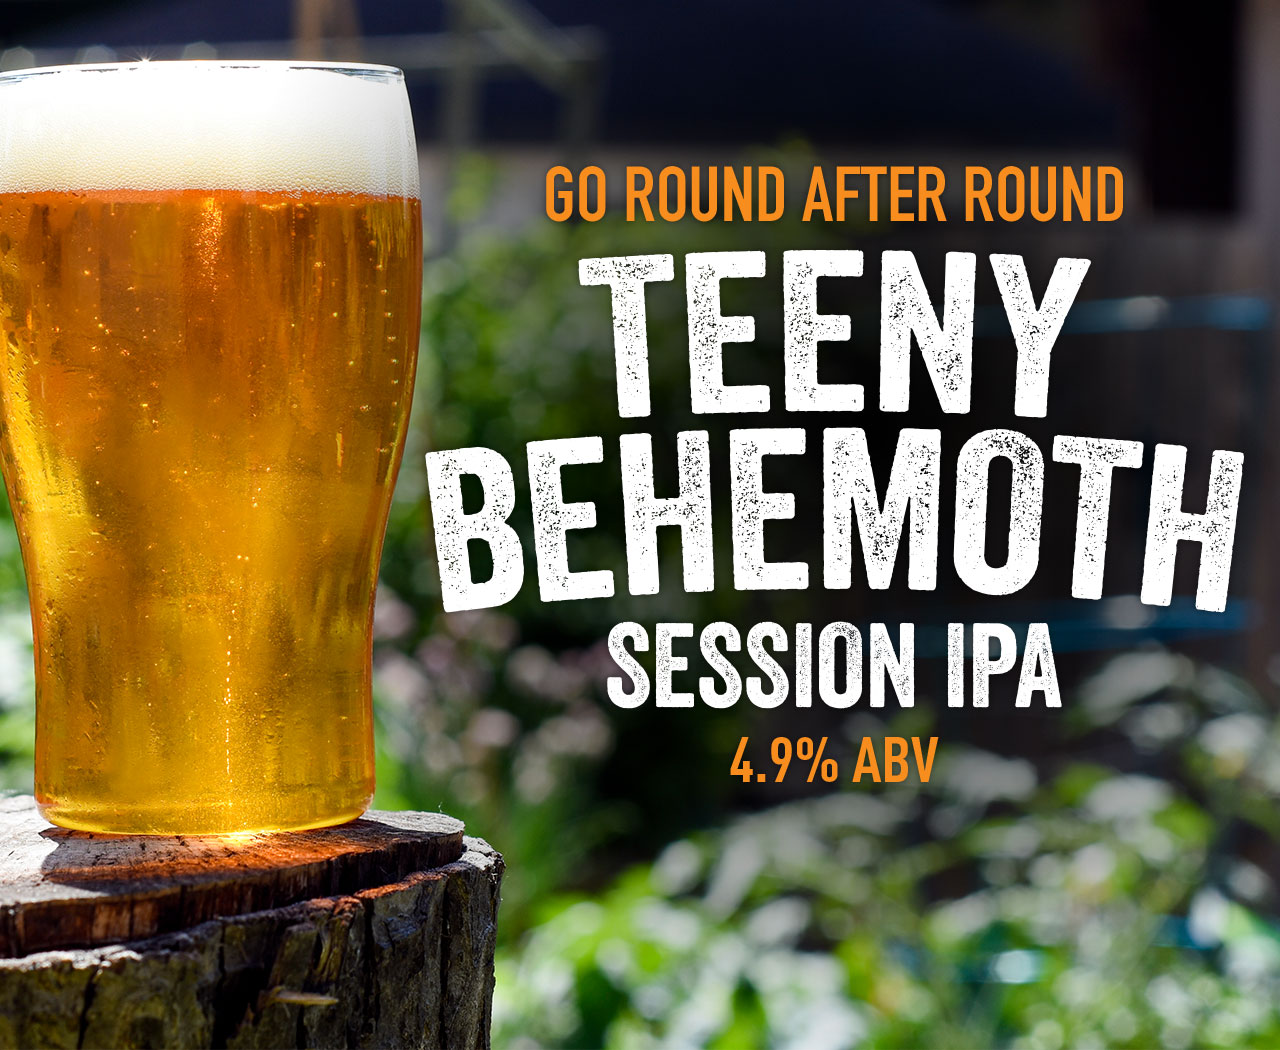 Introducing Teeny Behemoth Session IPA